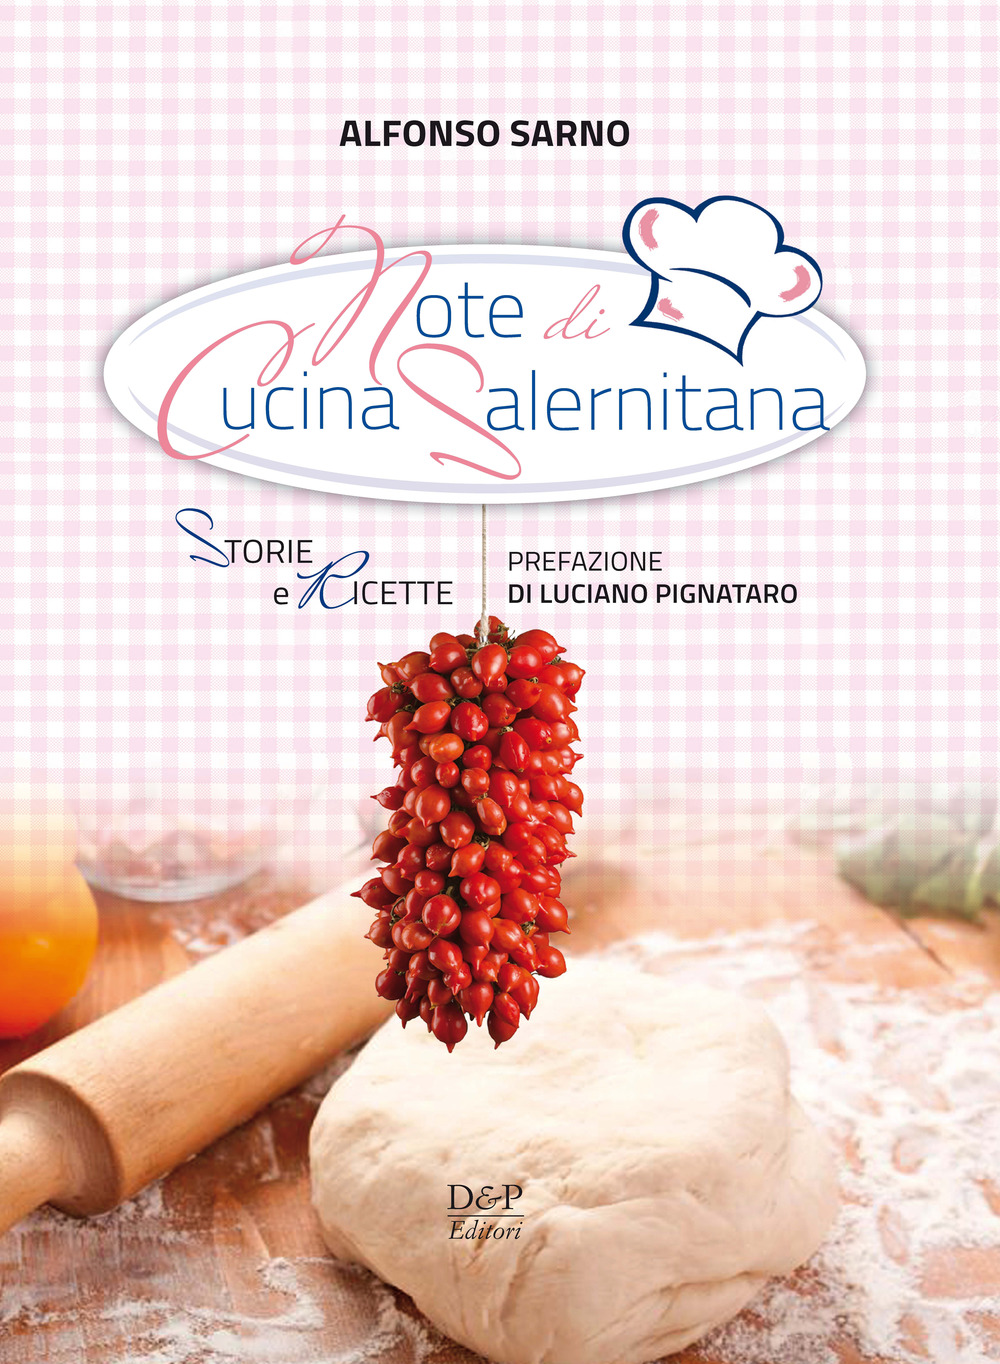 Image of Note di cucina salernitana